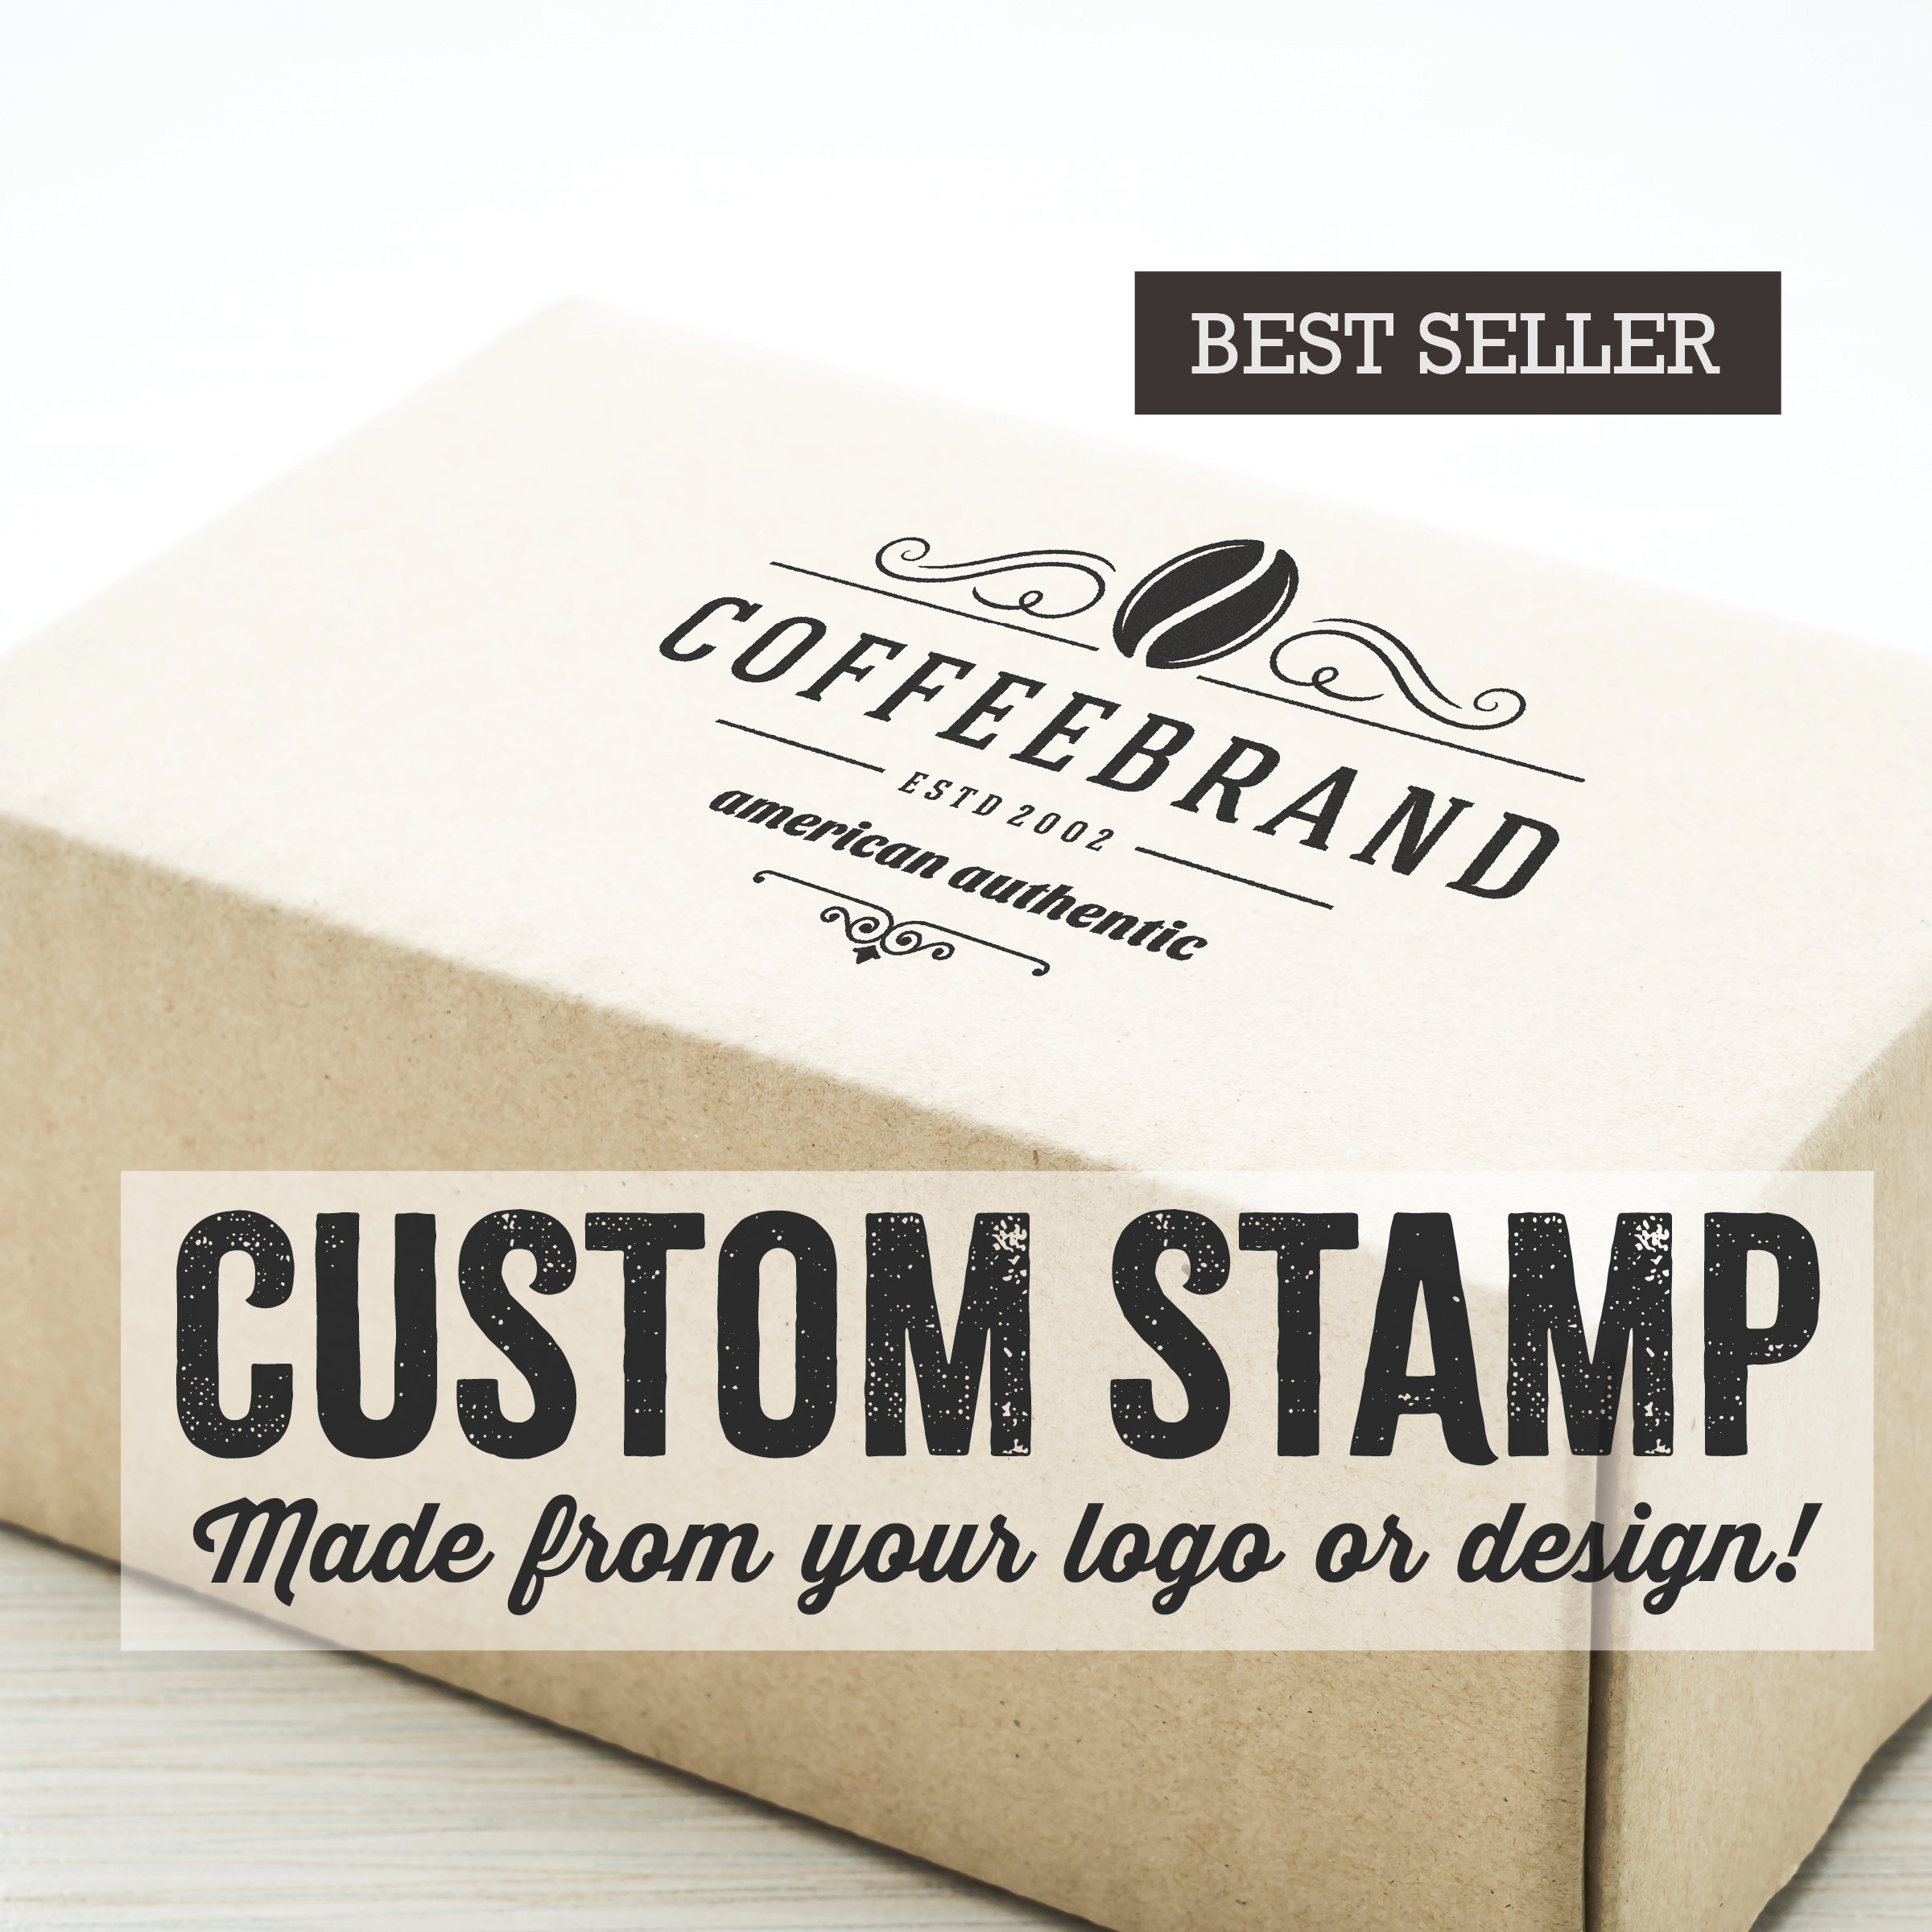 How Custom Rubber Stamps Benefit Your Startup Business? - AllTopStartups